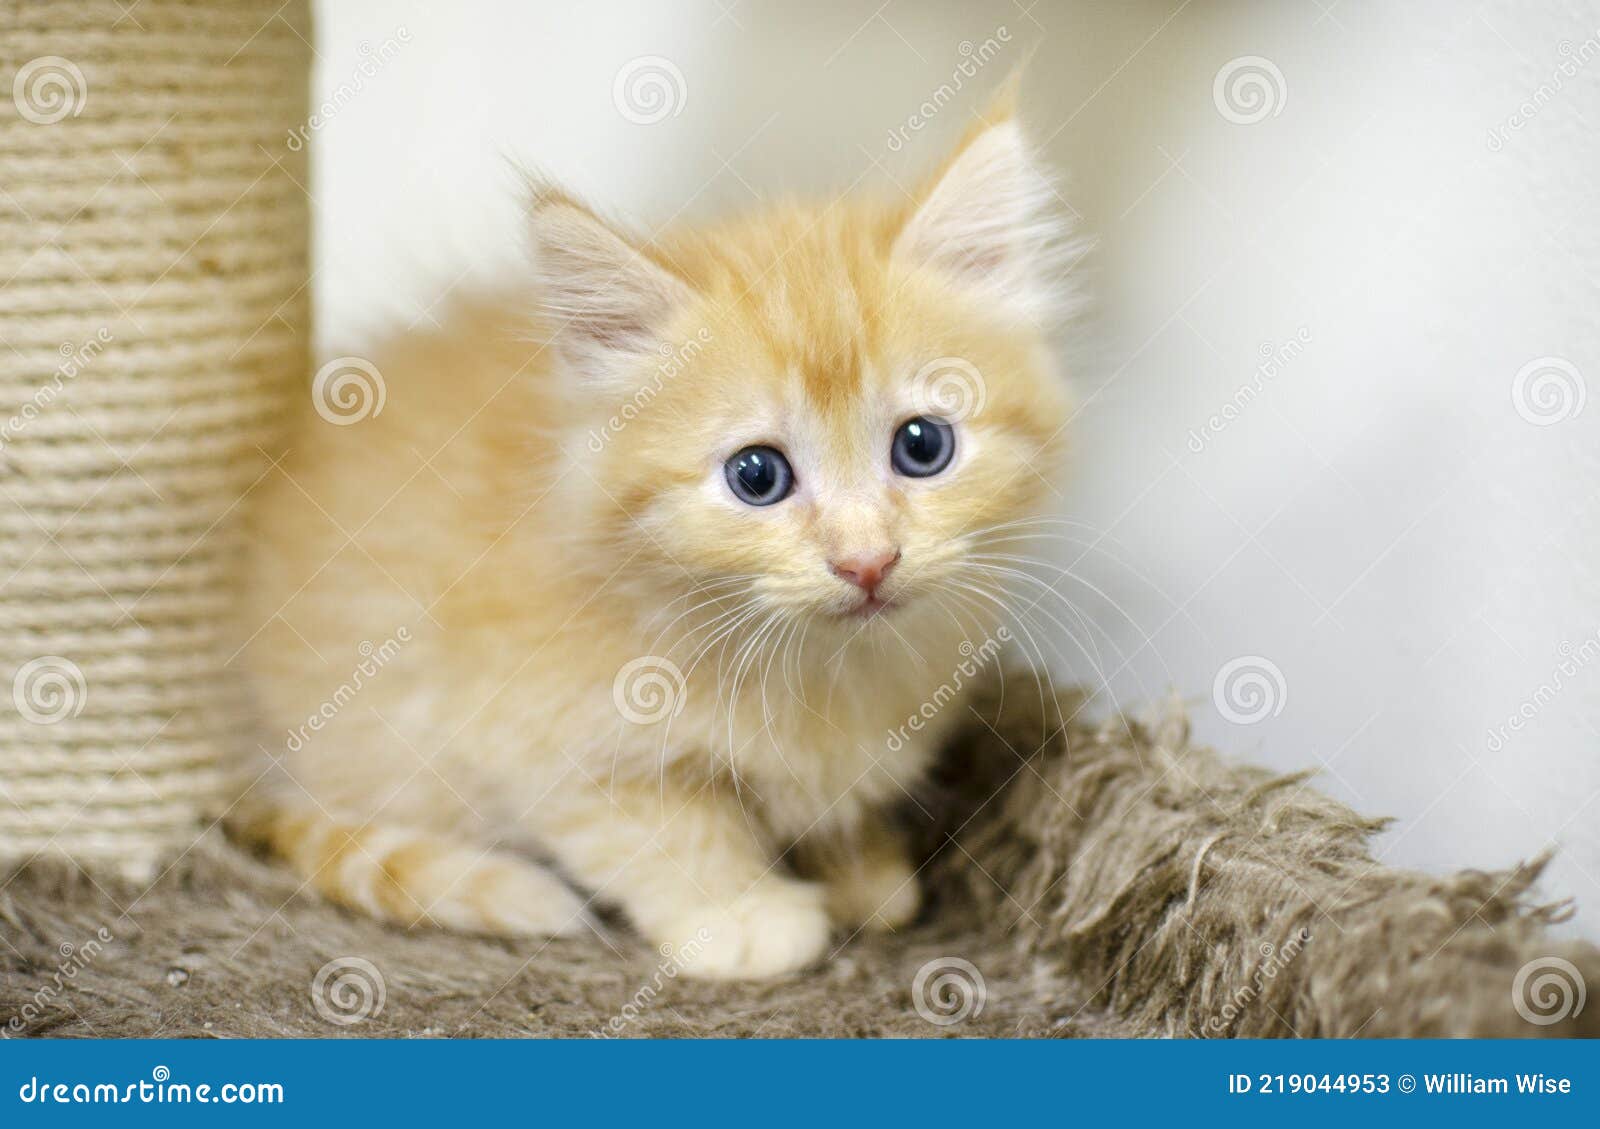 Fluffy Orange Long Hair Kitten with Blue Eyes Stock Image - Image of orange,  fluffy: 219044953